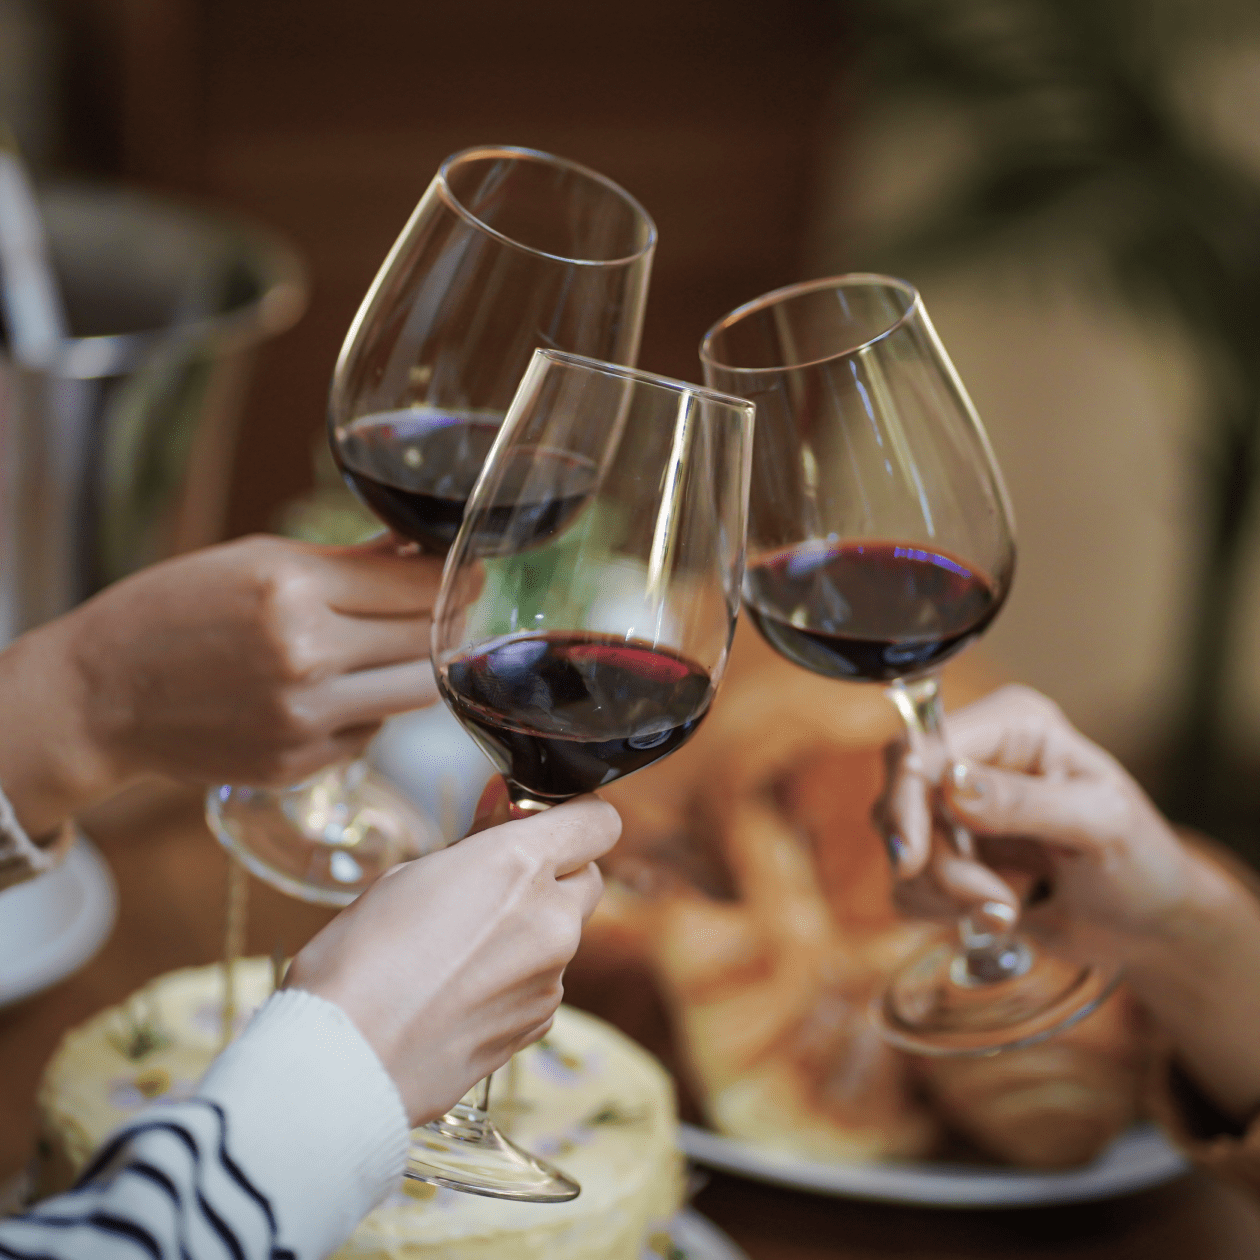 Cheersing glasses of red wine | Macy's Wine Shop